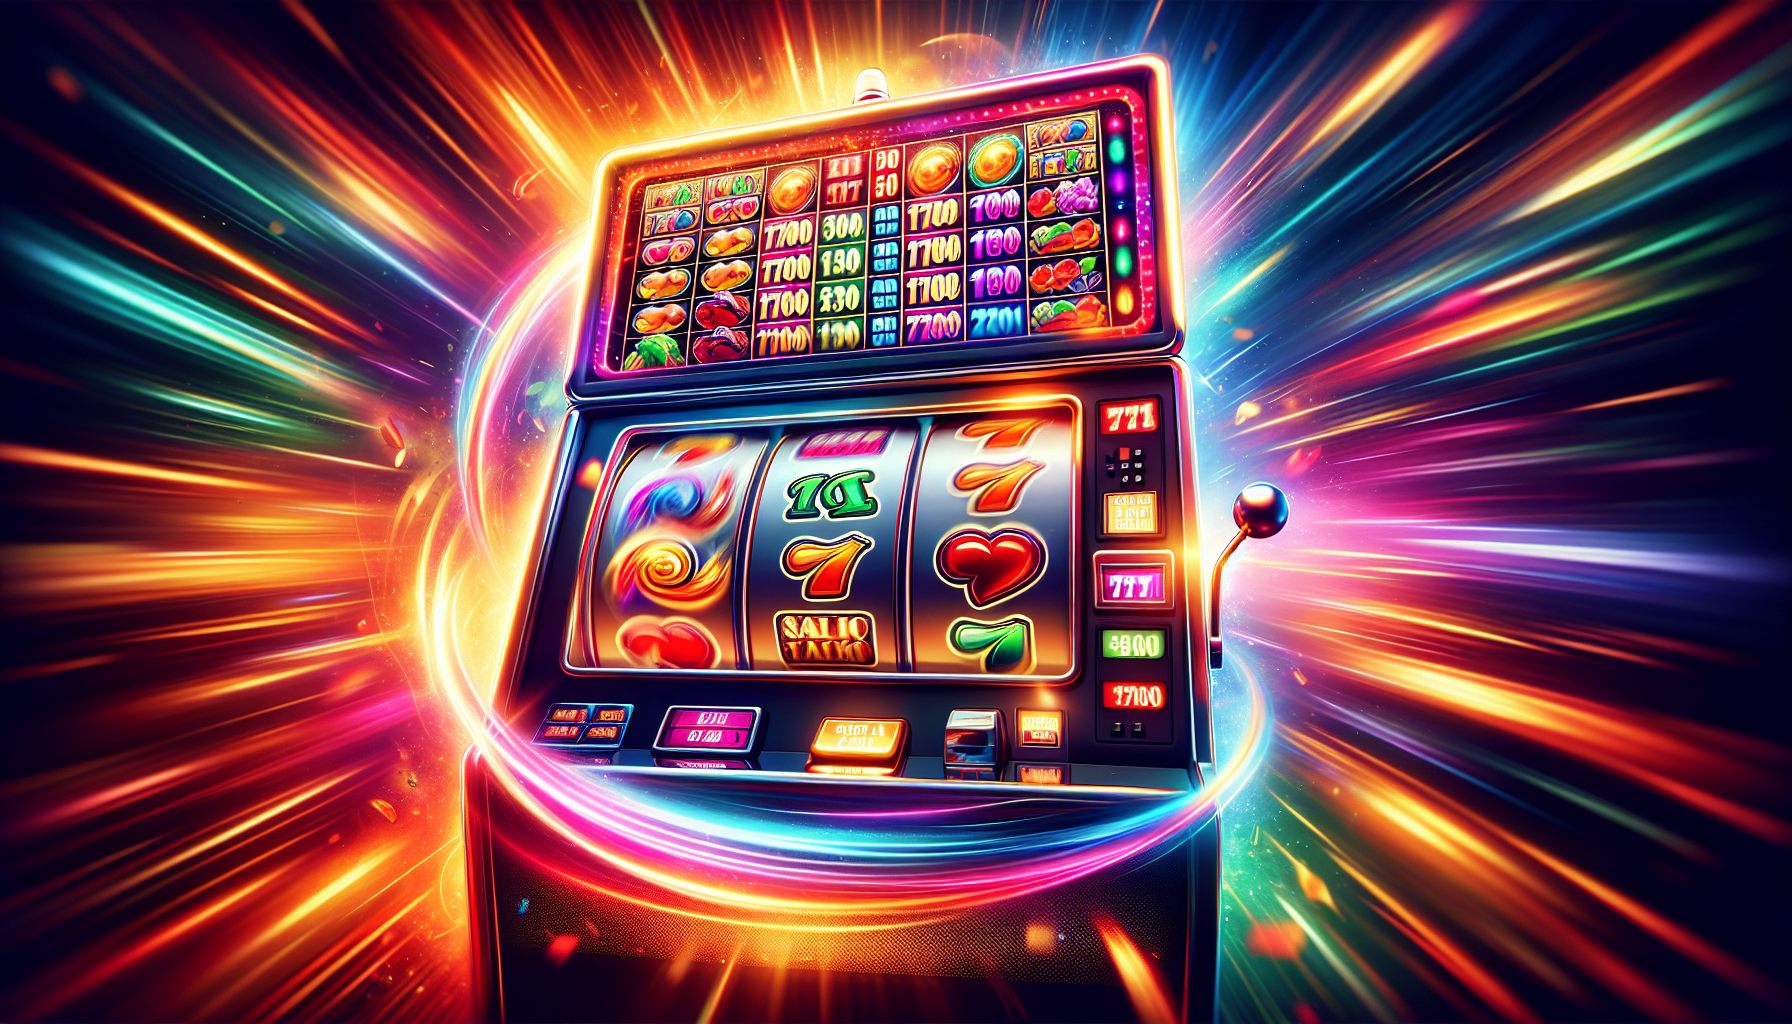 Do Slot Machines Pay Out Randomly?